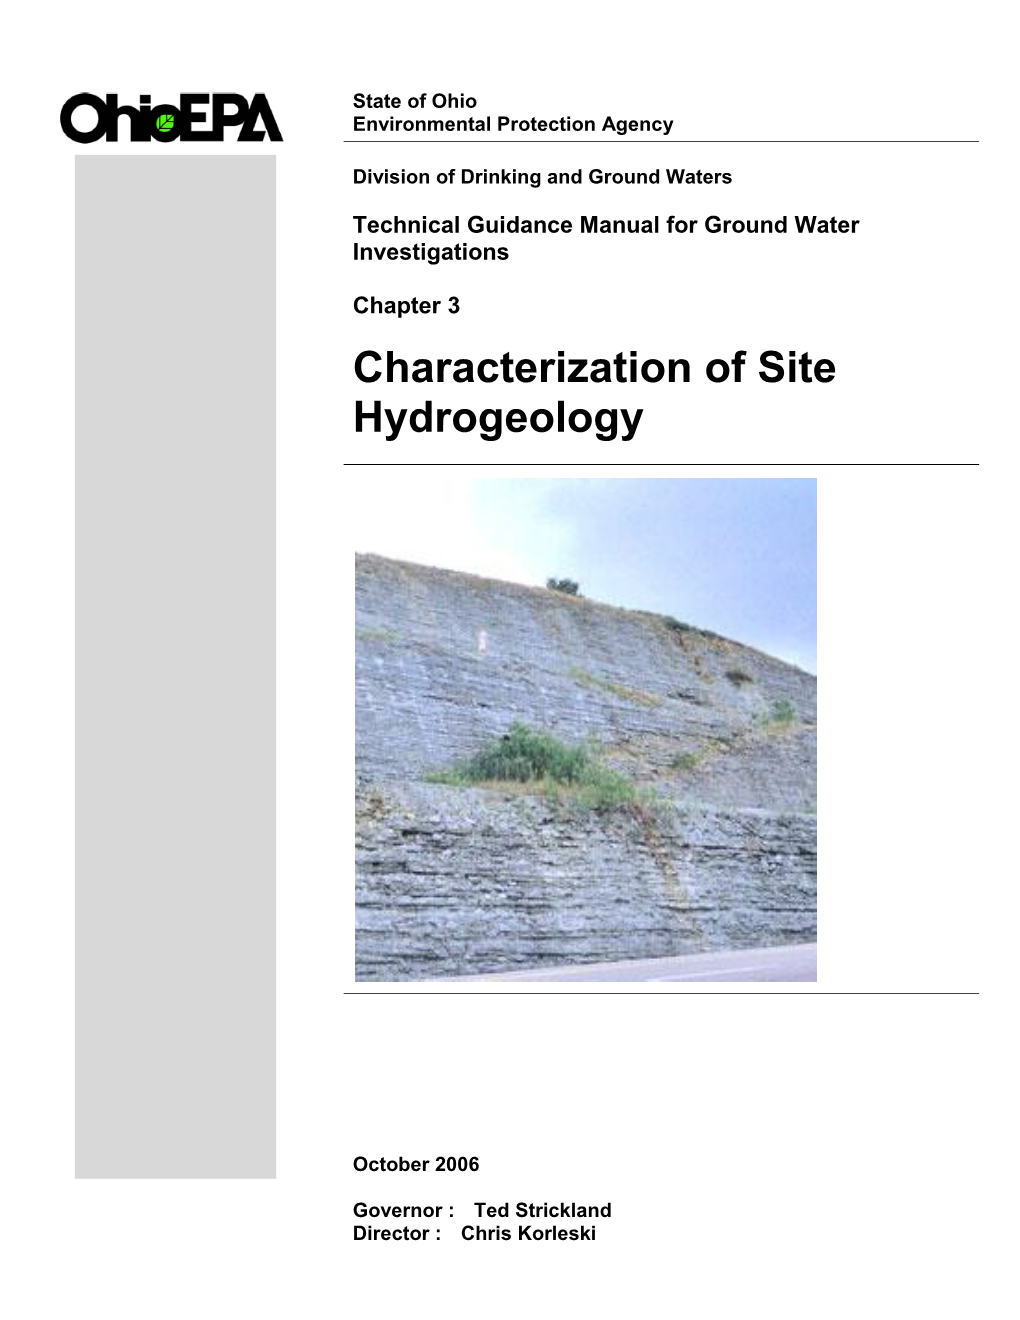 Characterization of Site Hydrogeology